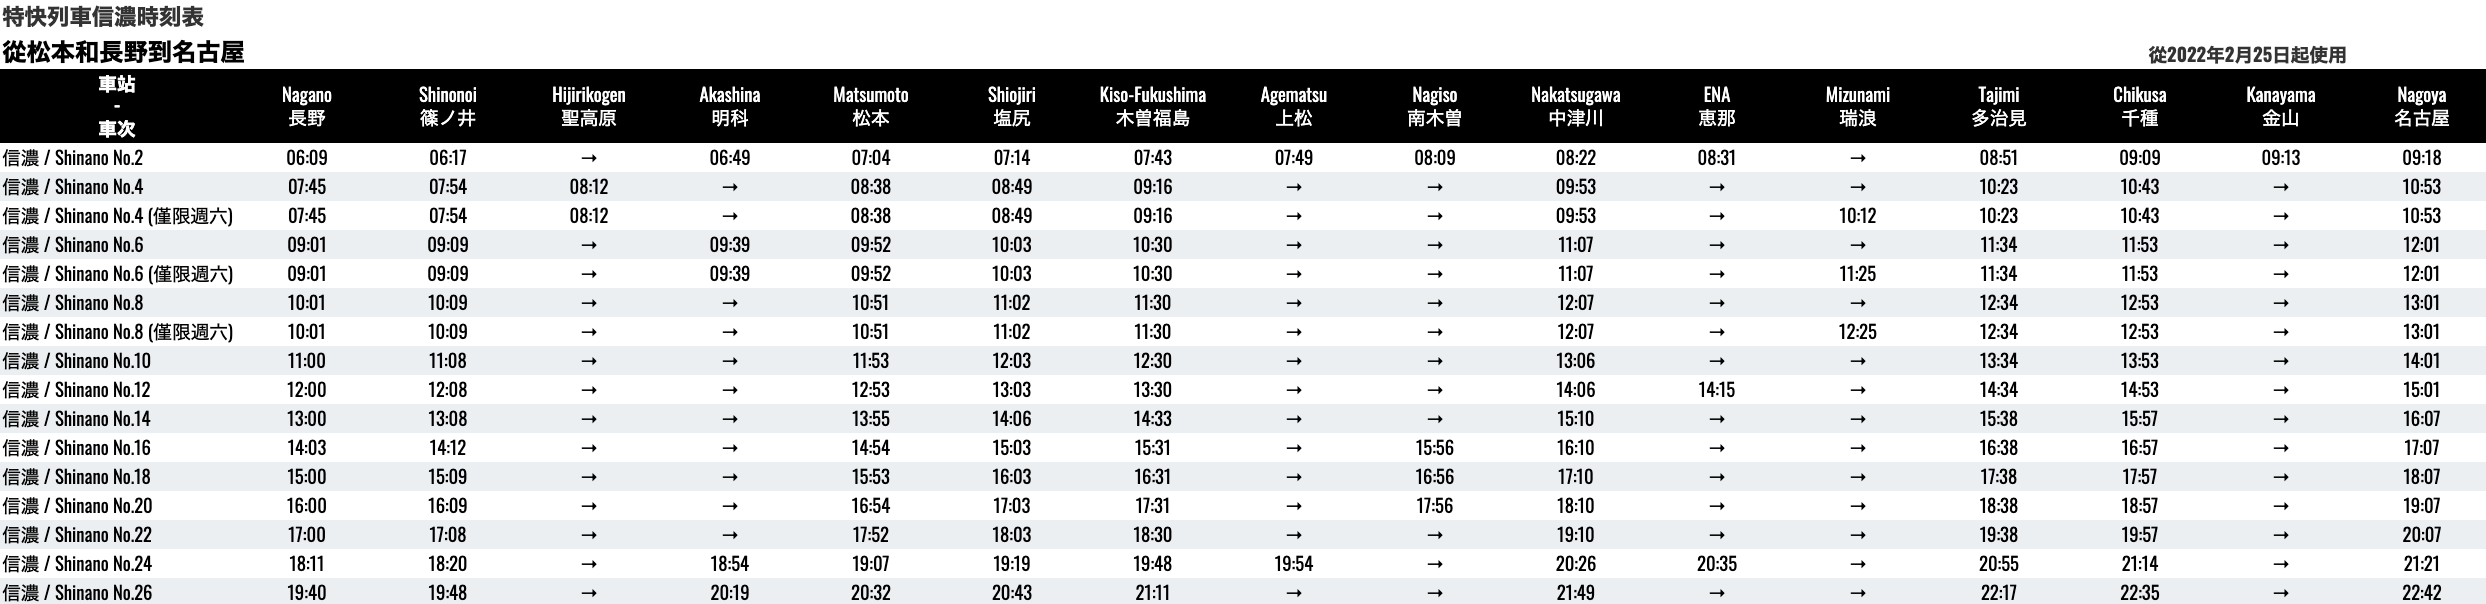 Shinano-Nagano-Nagoya-timetable